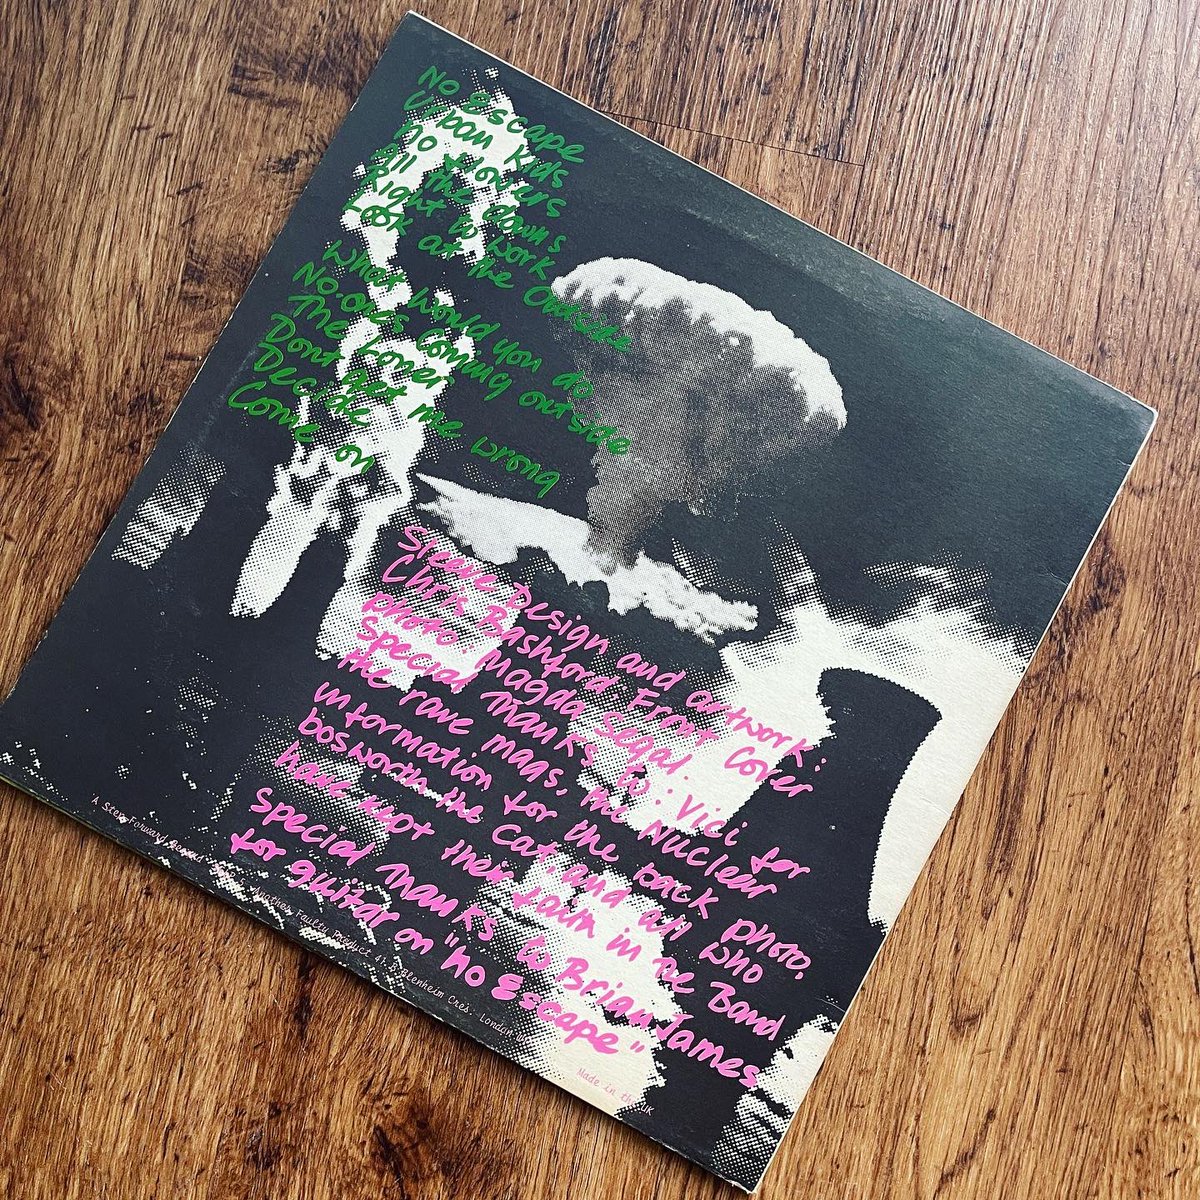 Alternative Hits from ‘81 #chelsea #vinylcollection #punkvinyl